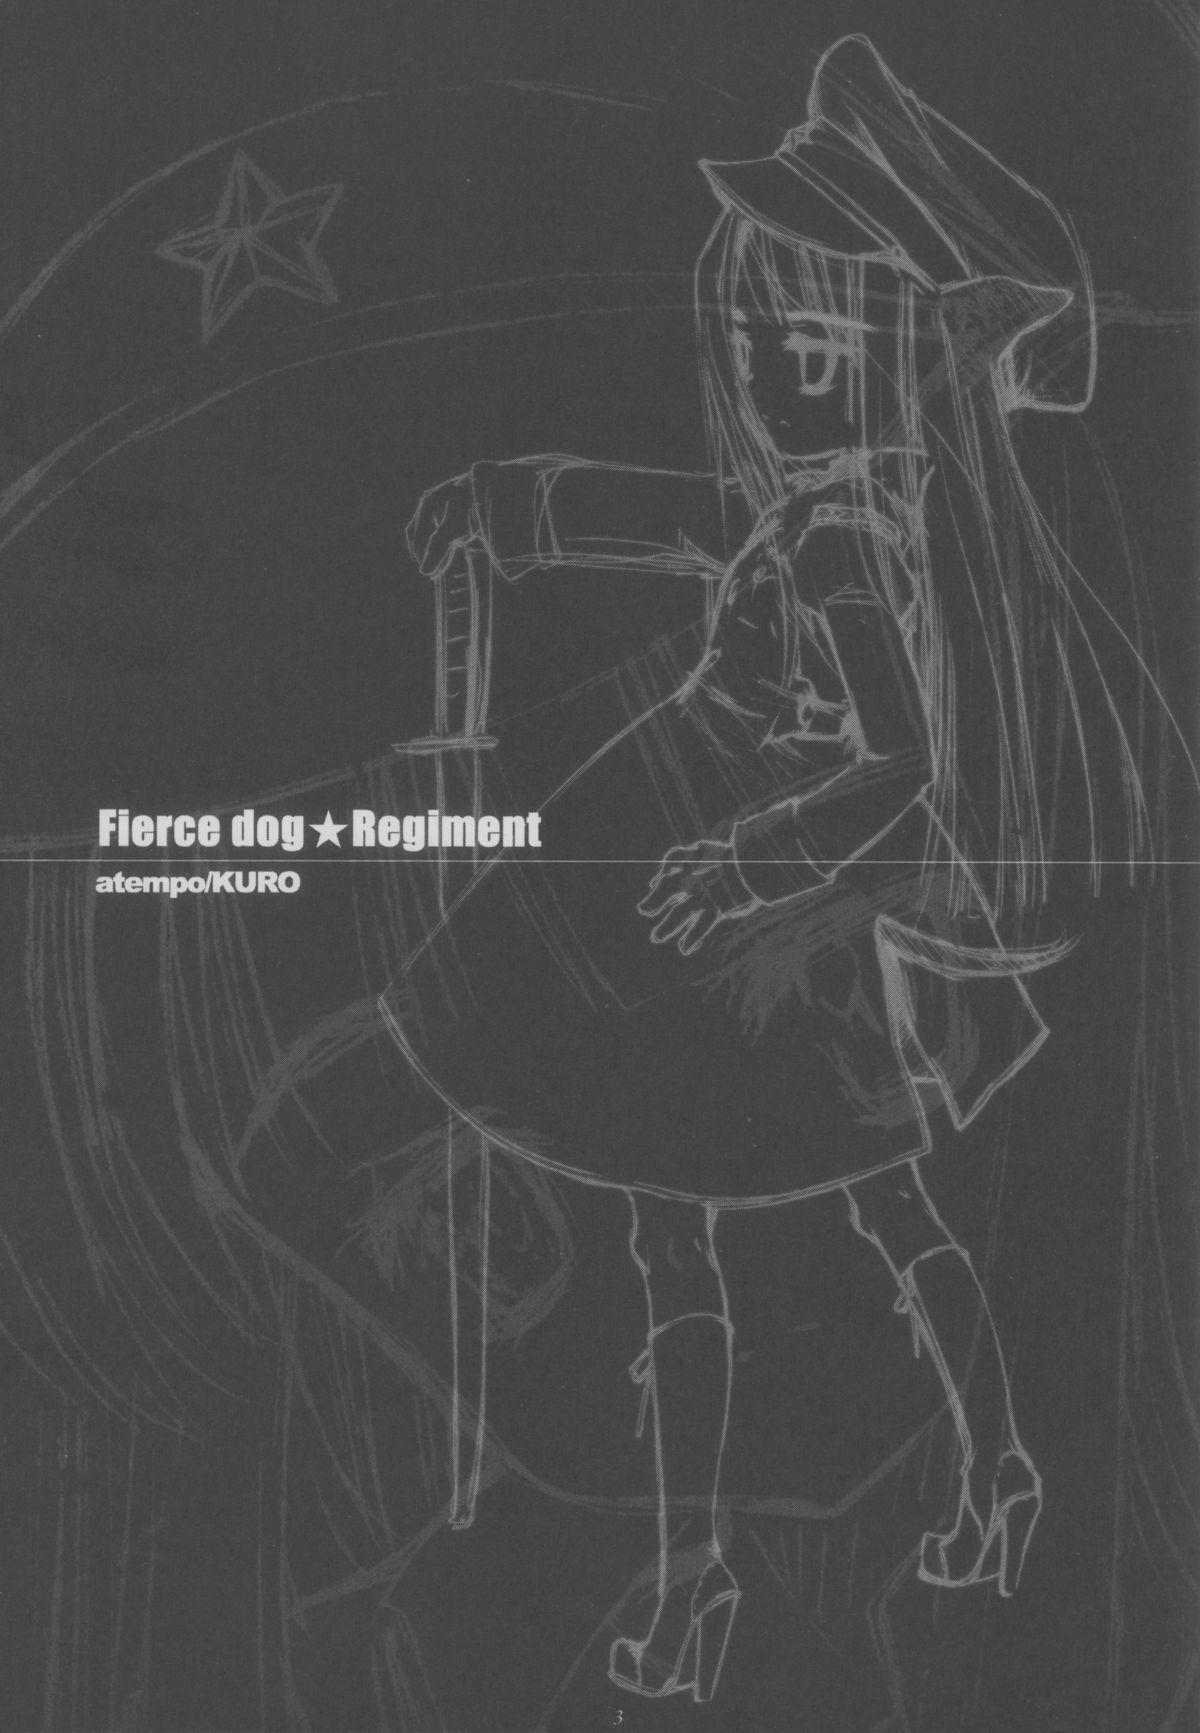 Fierce dog★Regiment 2